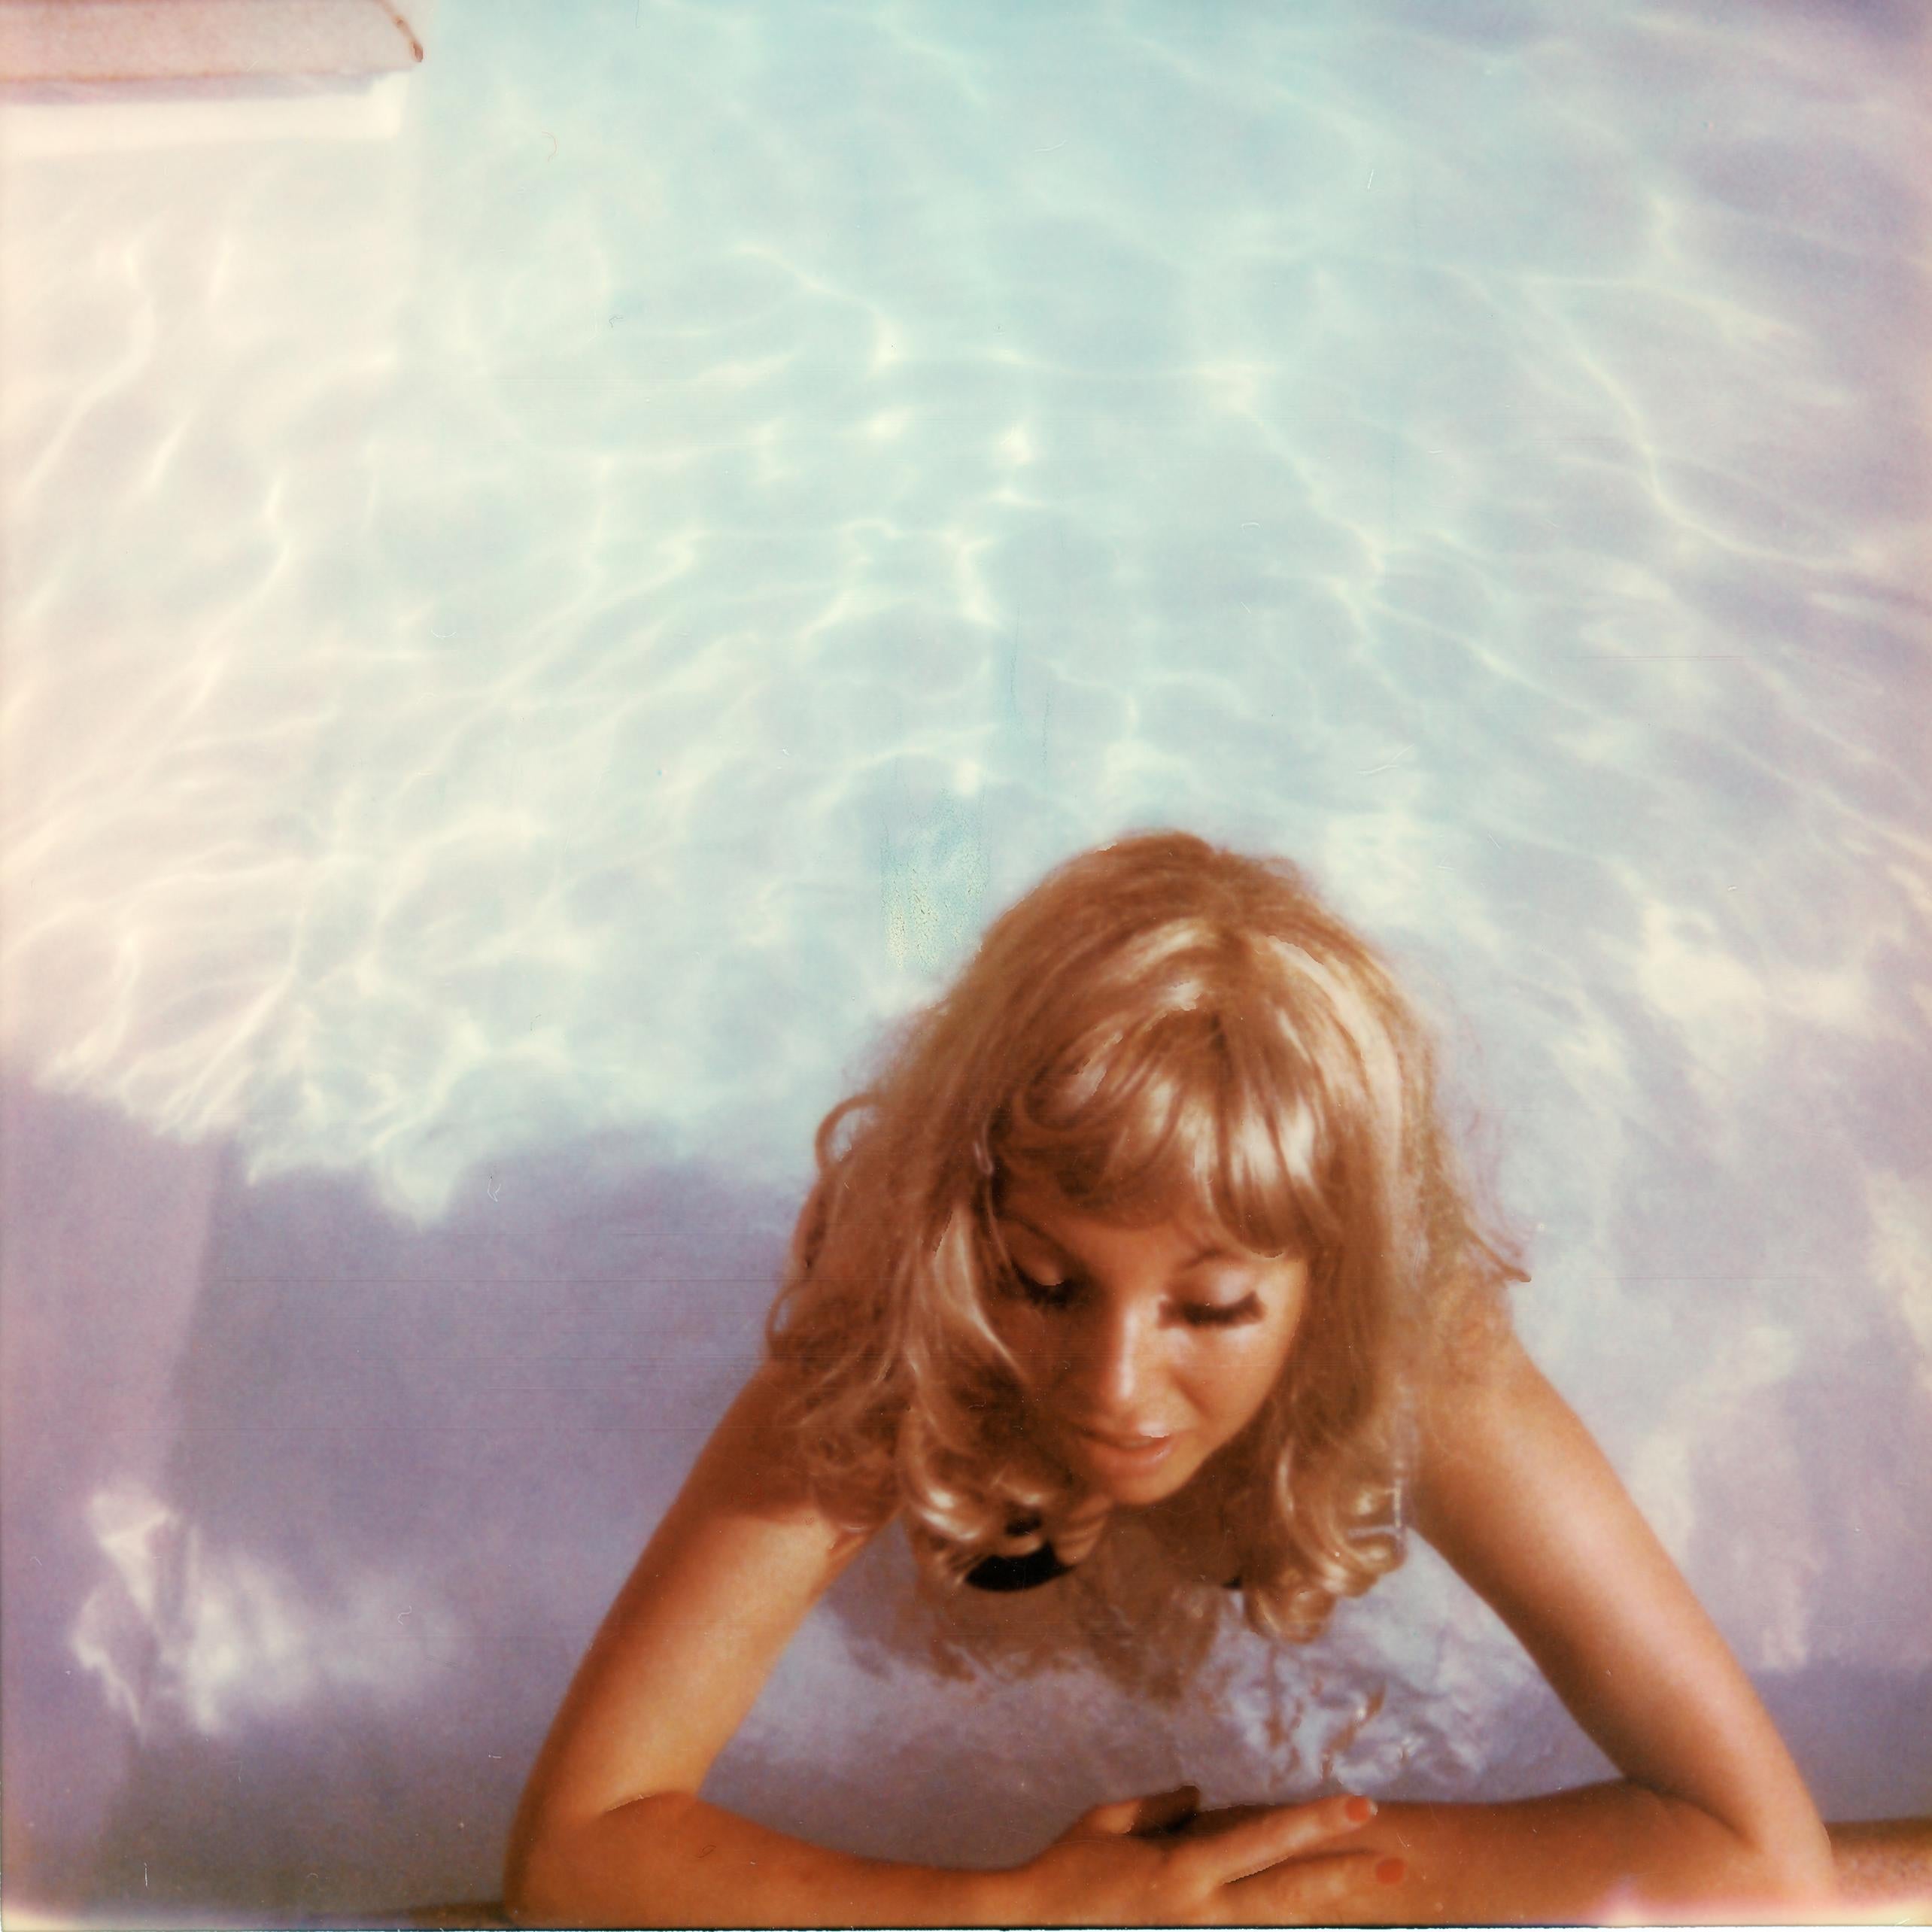 Clare Marie Bailey Nude Photograph - Memories of Summer - Contemporary, Polaroid, Woman, 21st Century